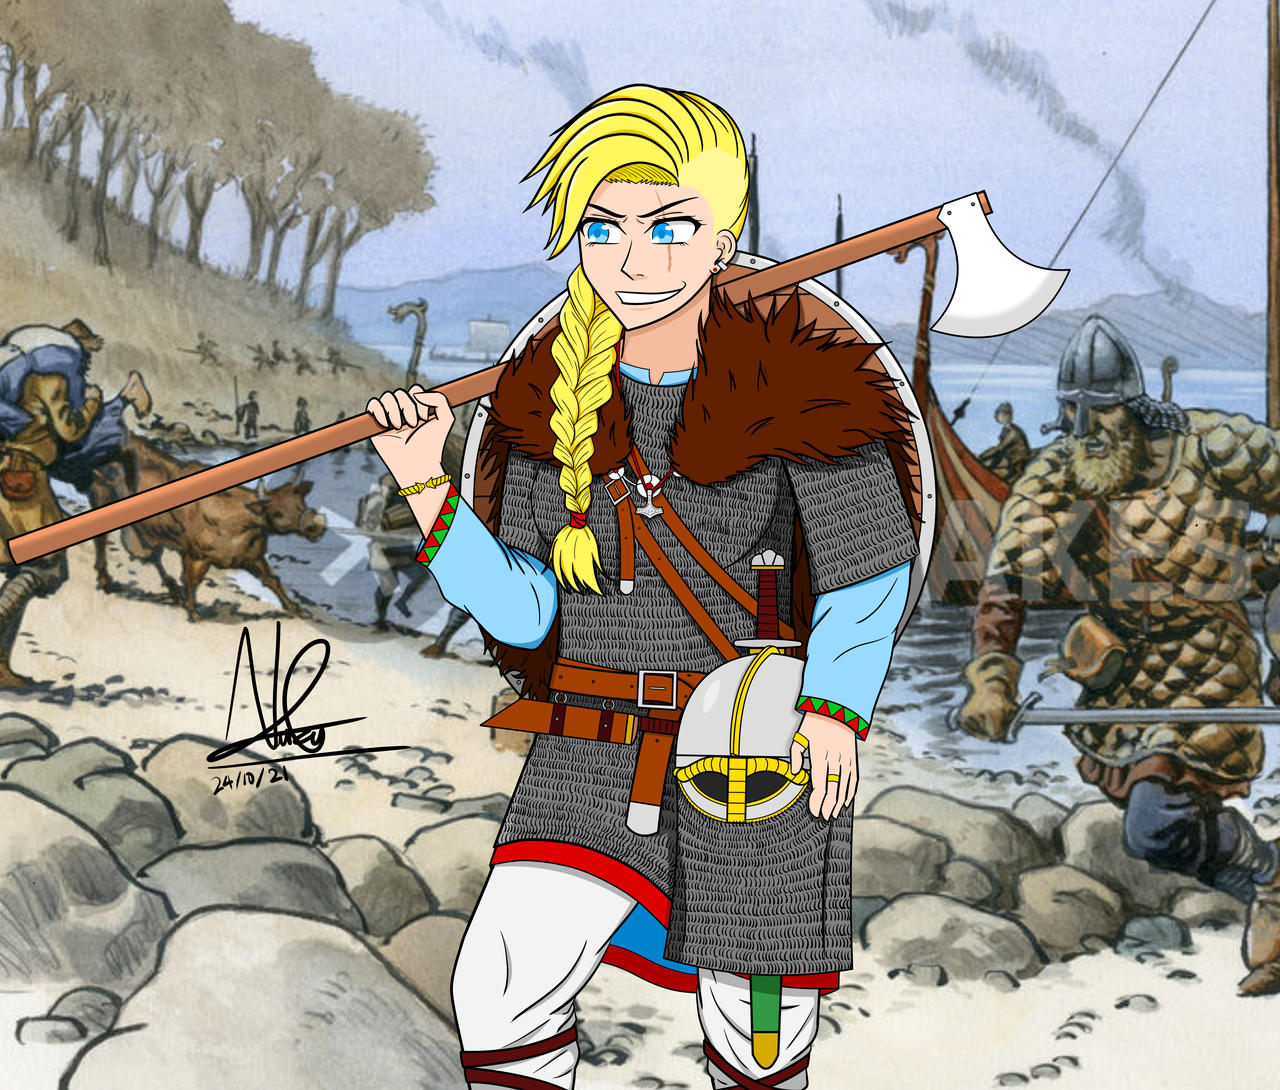 Shield-maiden, Vikings Wiki